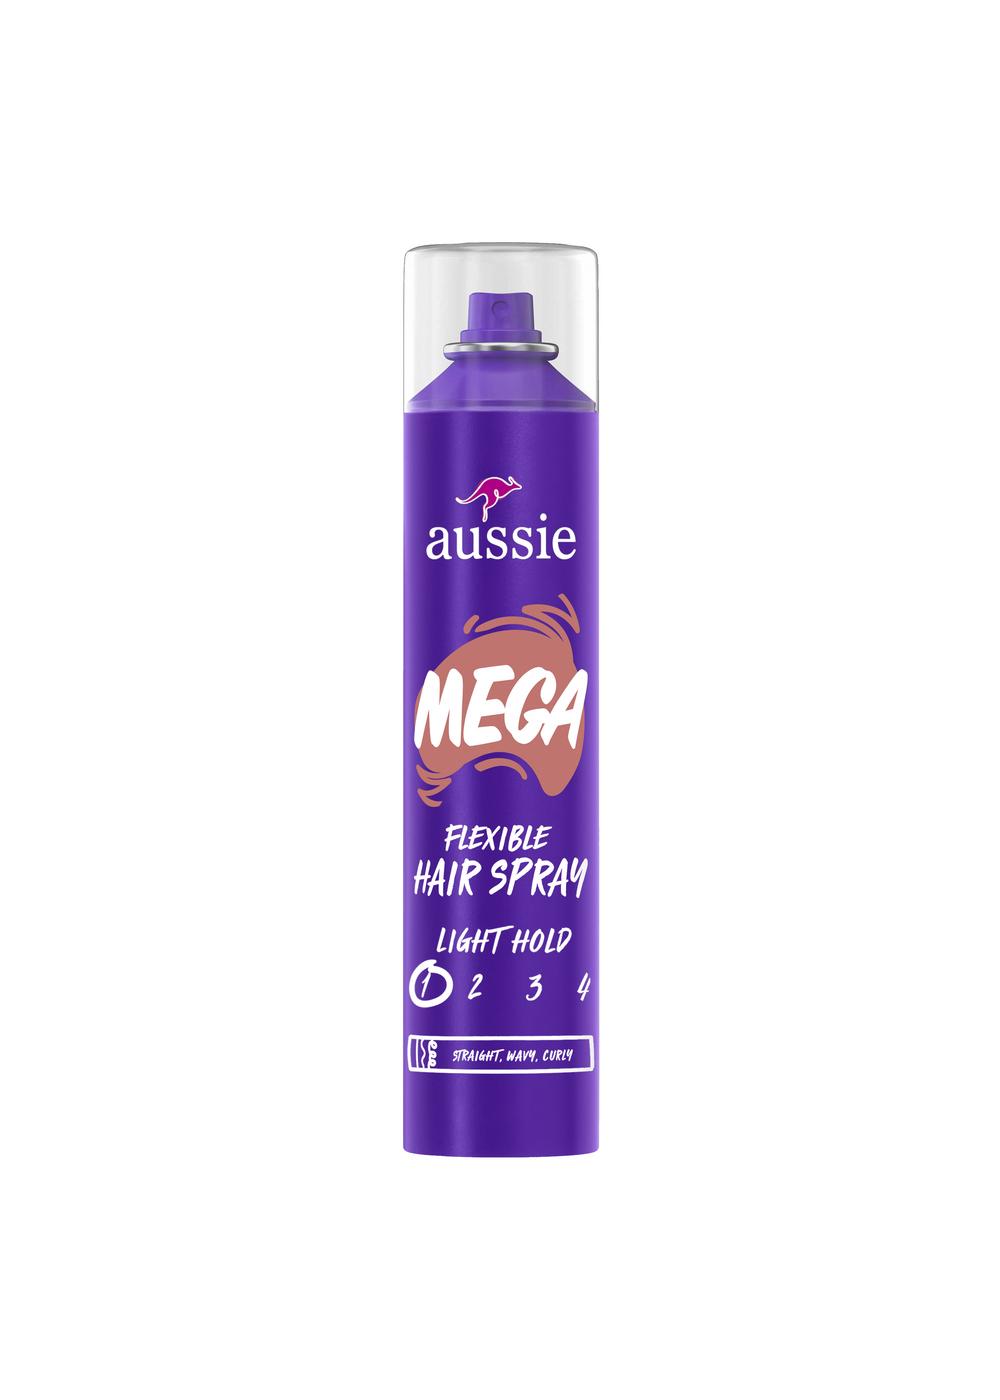 Aussie Mega Flexible Hair Spray; image 6 of 10